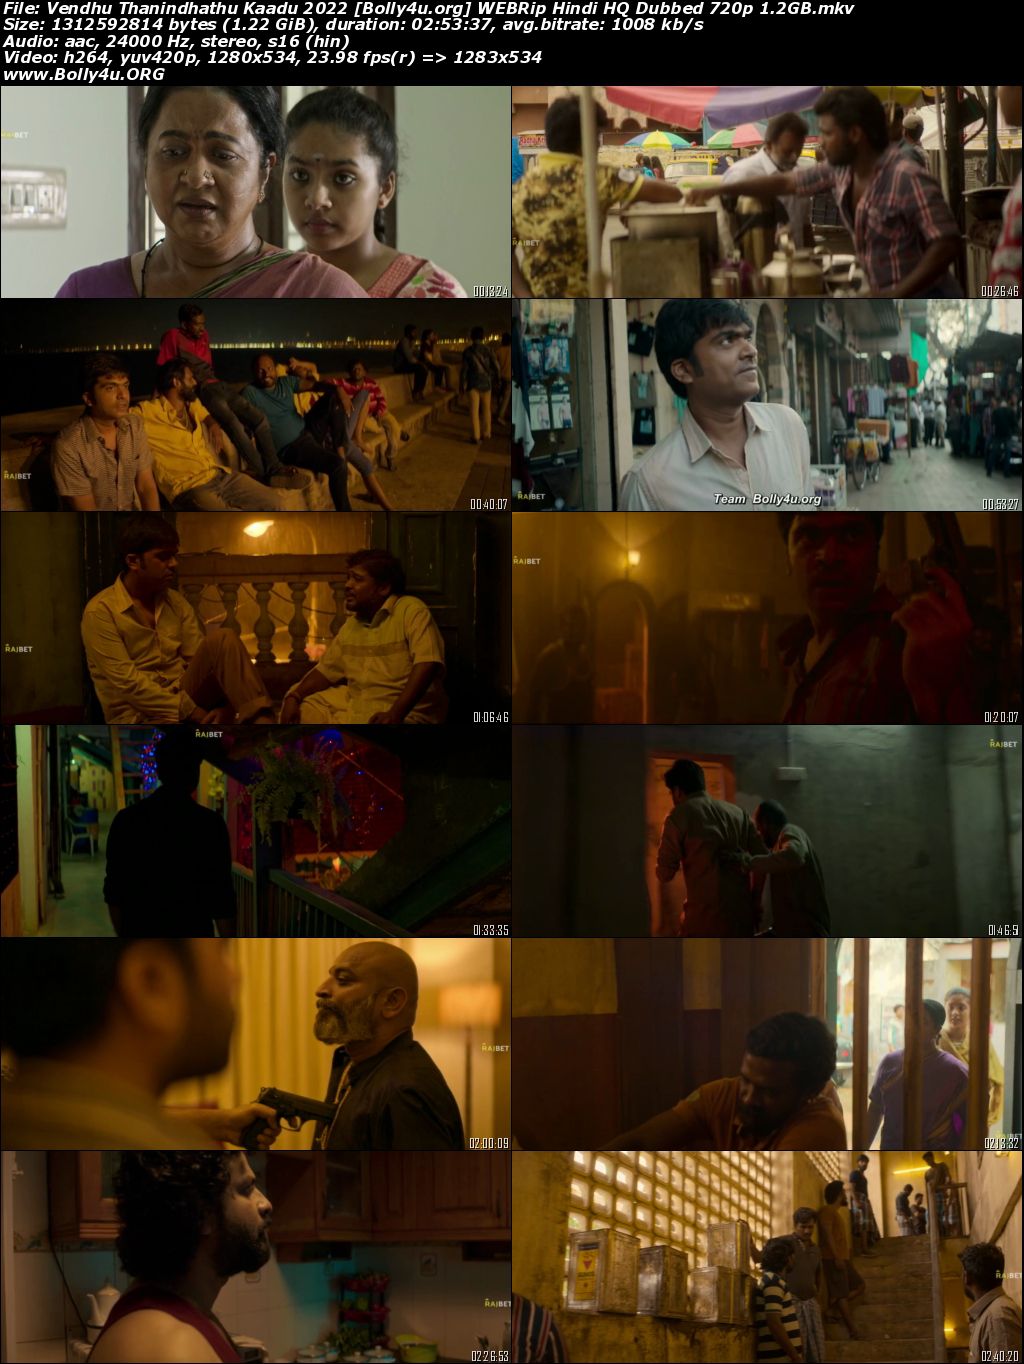 Vendhu Thanindhathu Kaadu 2022 WEBRip Hindi HQ Dubbed Full Movie Download 1080p 720p 480p